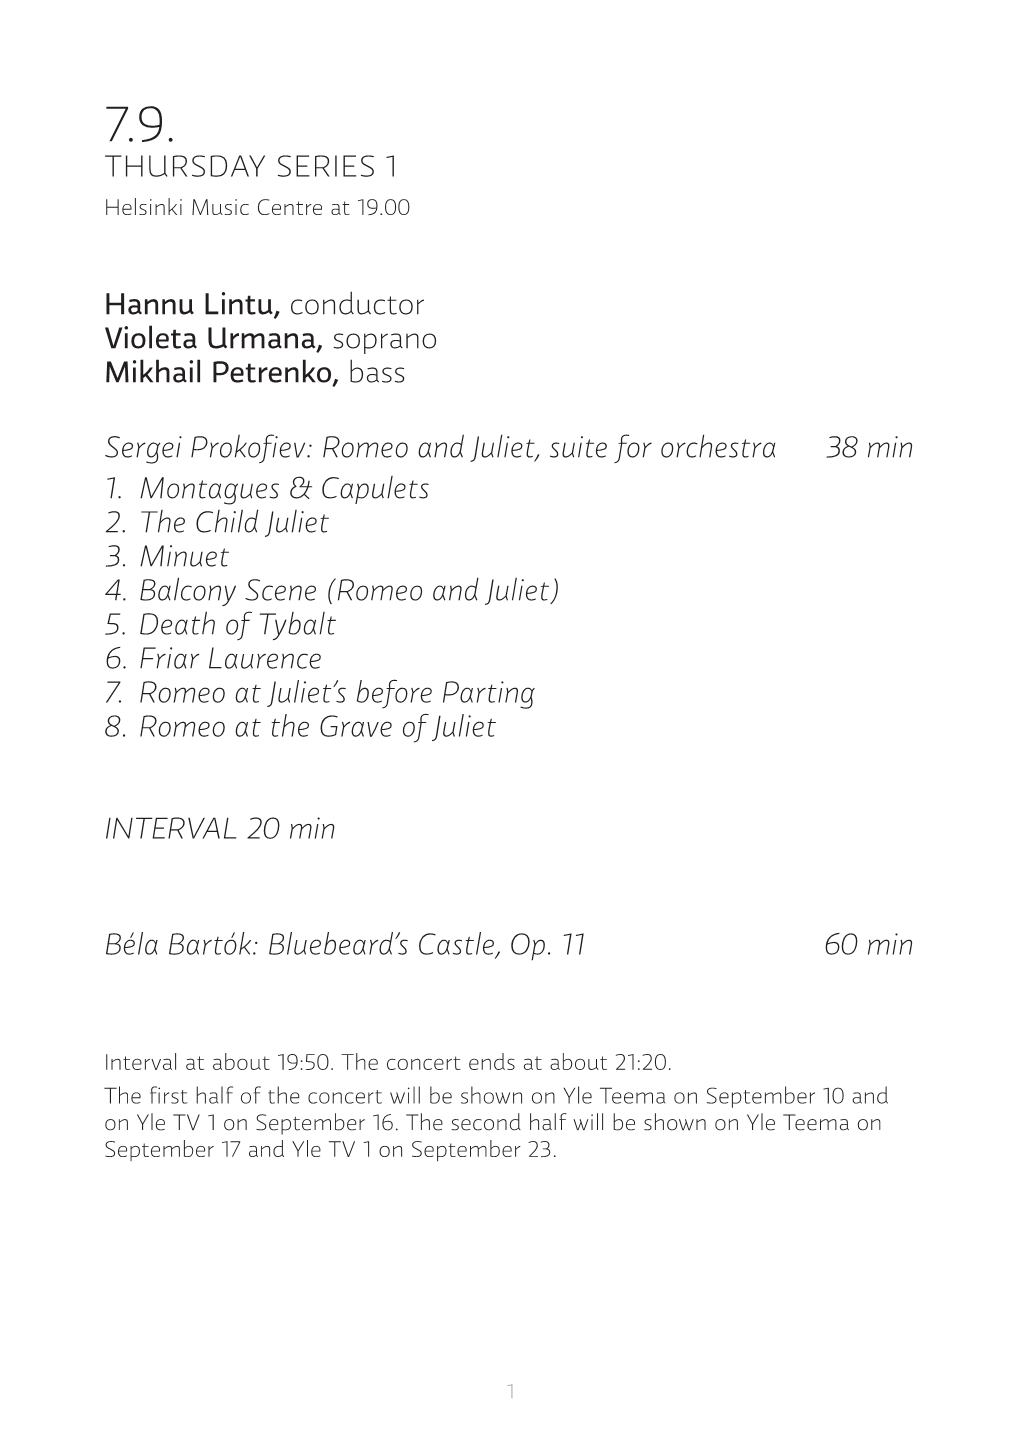 THURSDAY SERIES 1 Hannu Lintu, Conductor Violeta